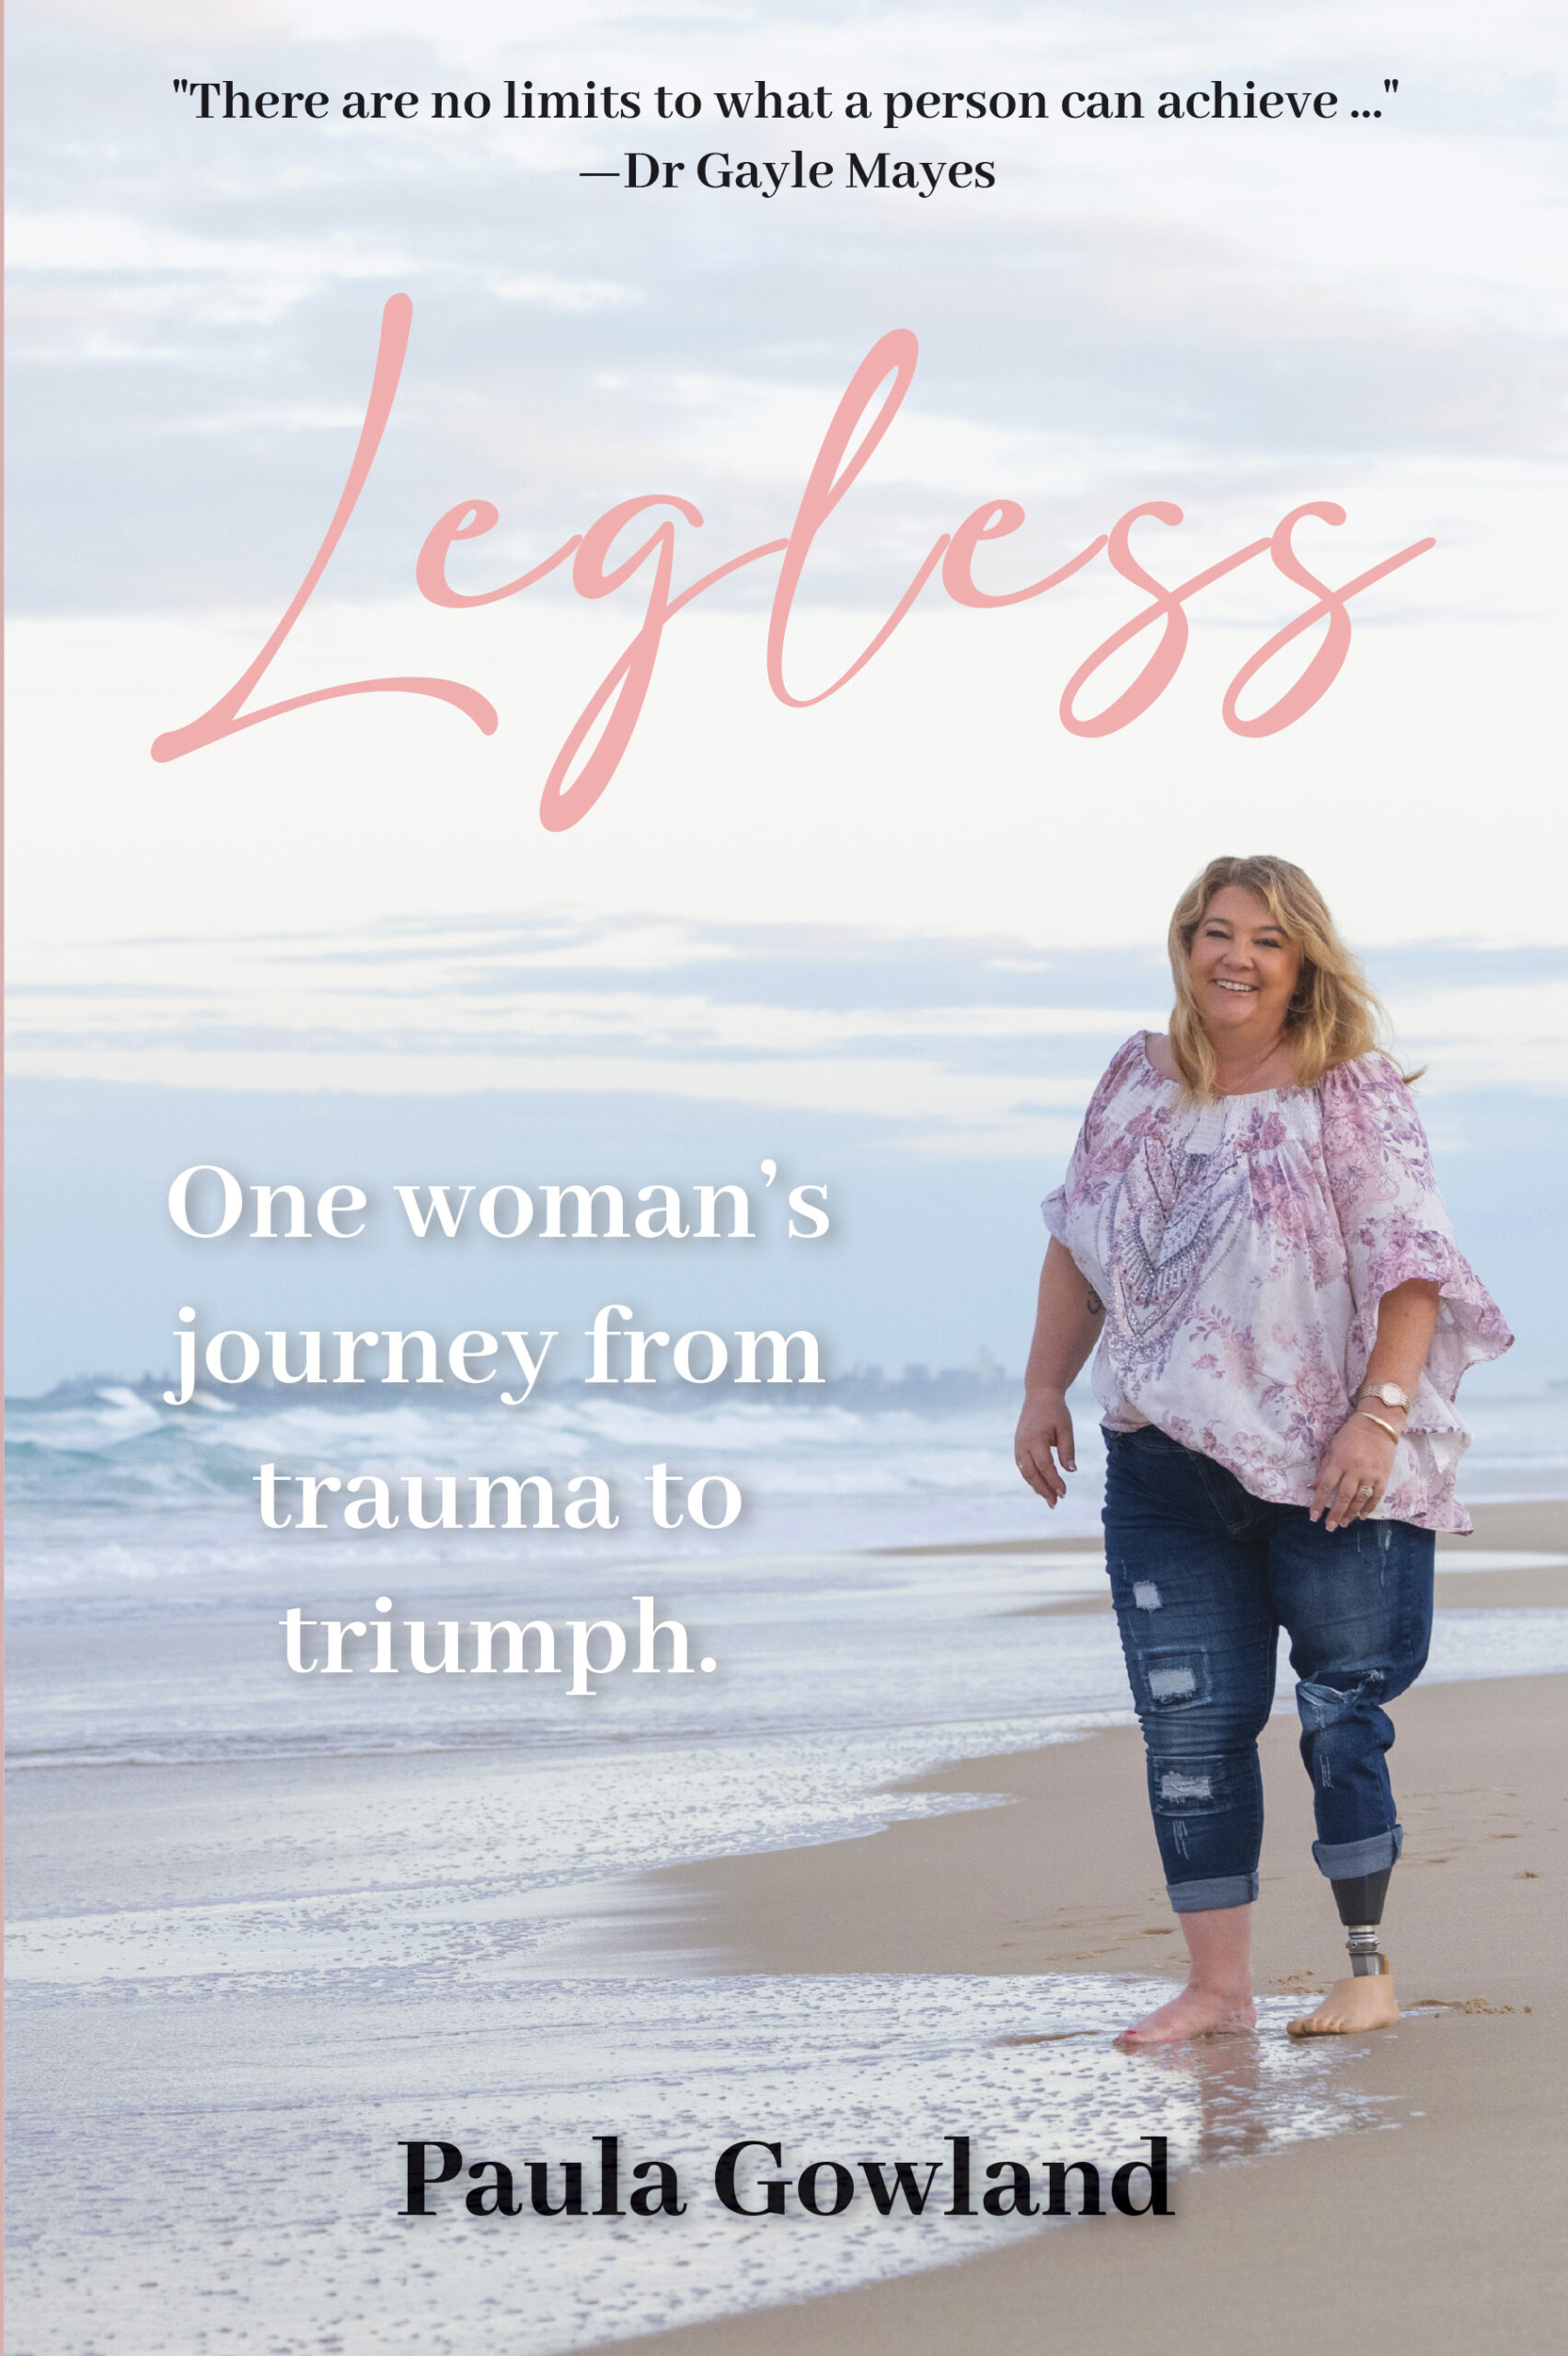 Legless: One woman’s journey from trauma to triumph by Paula Gowland